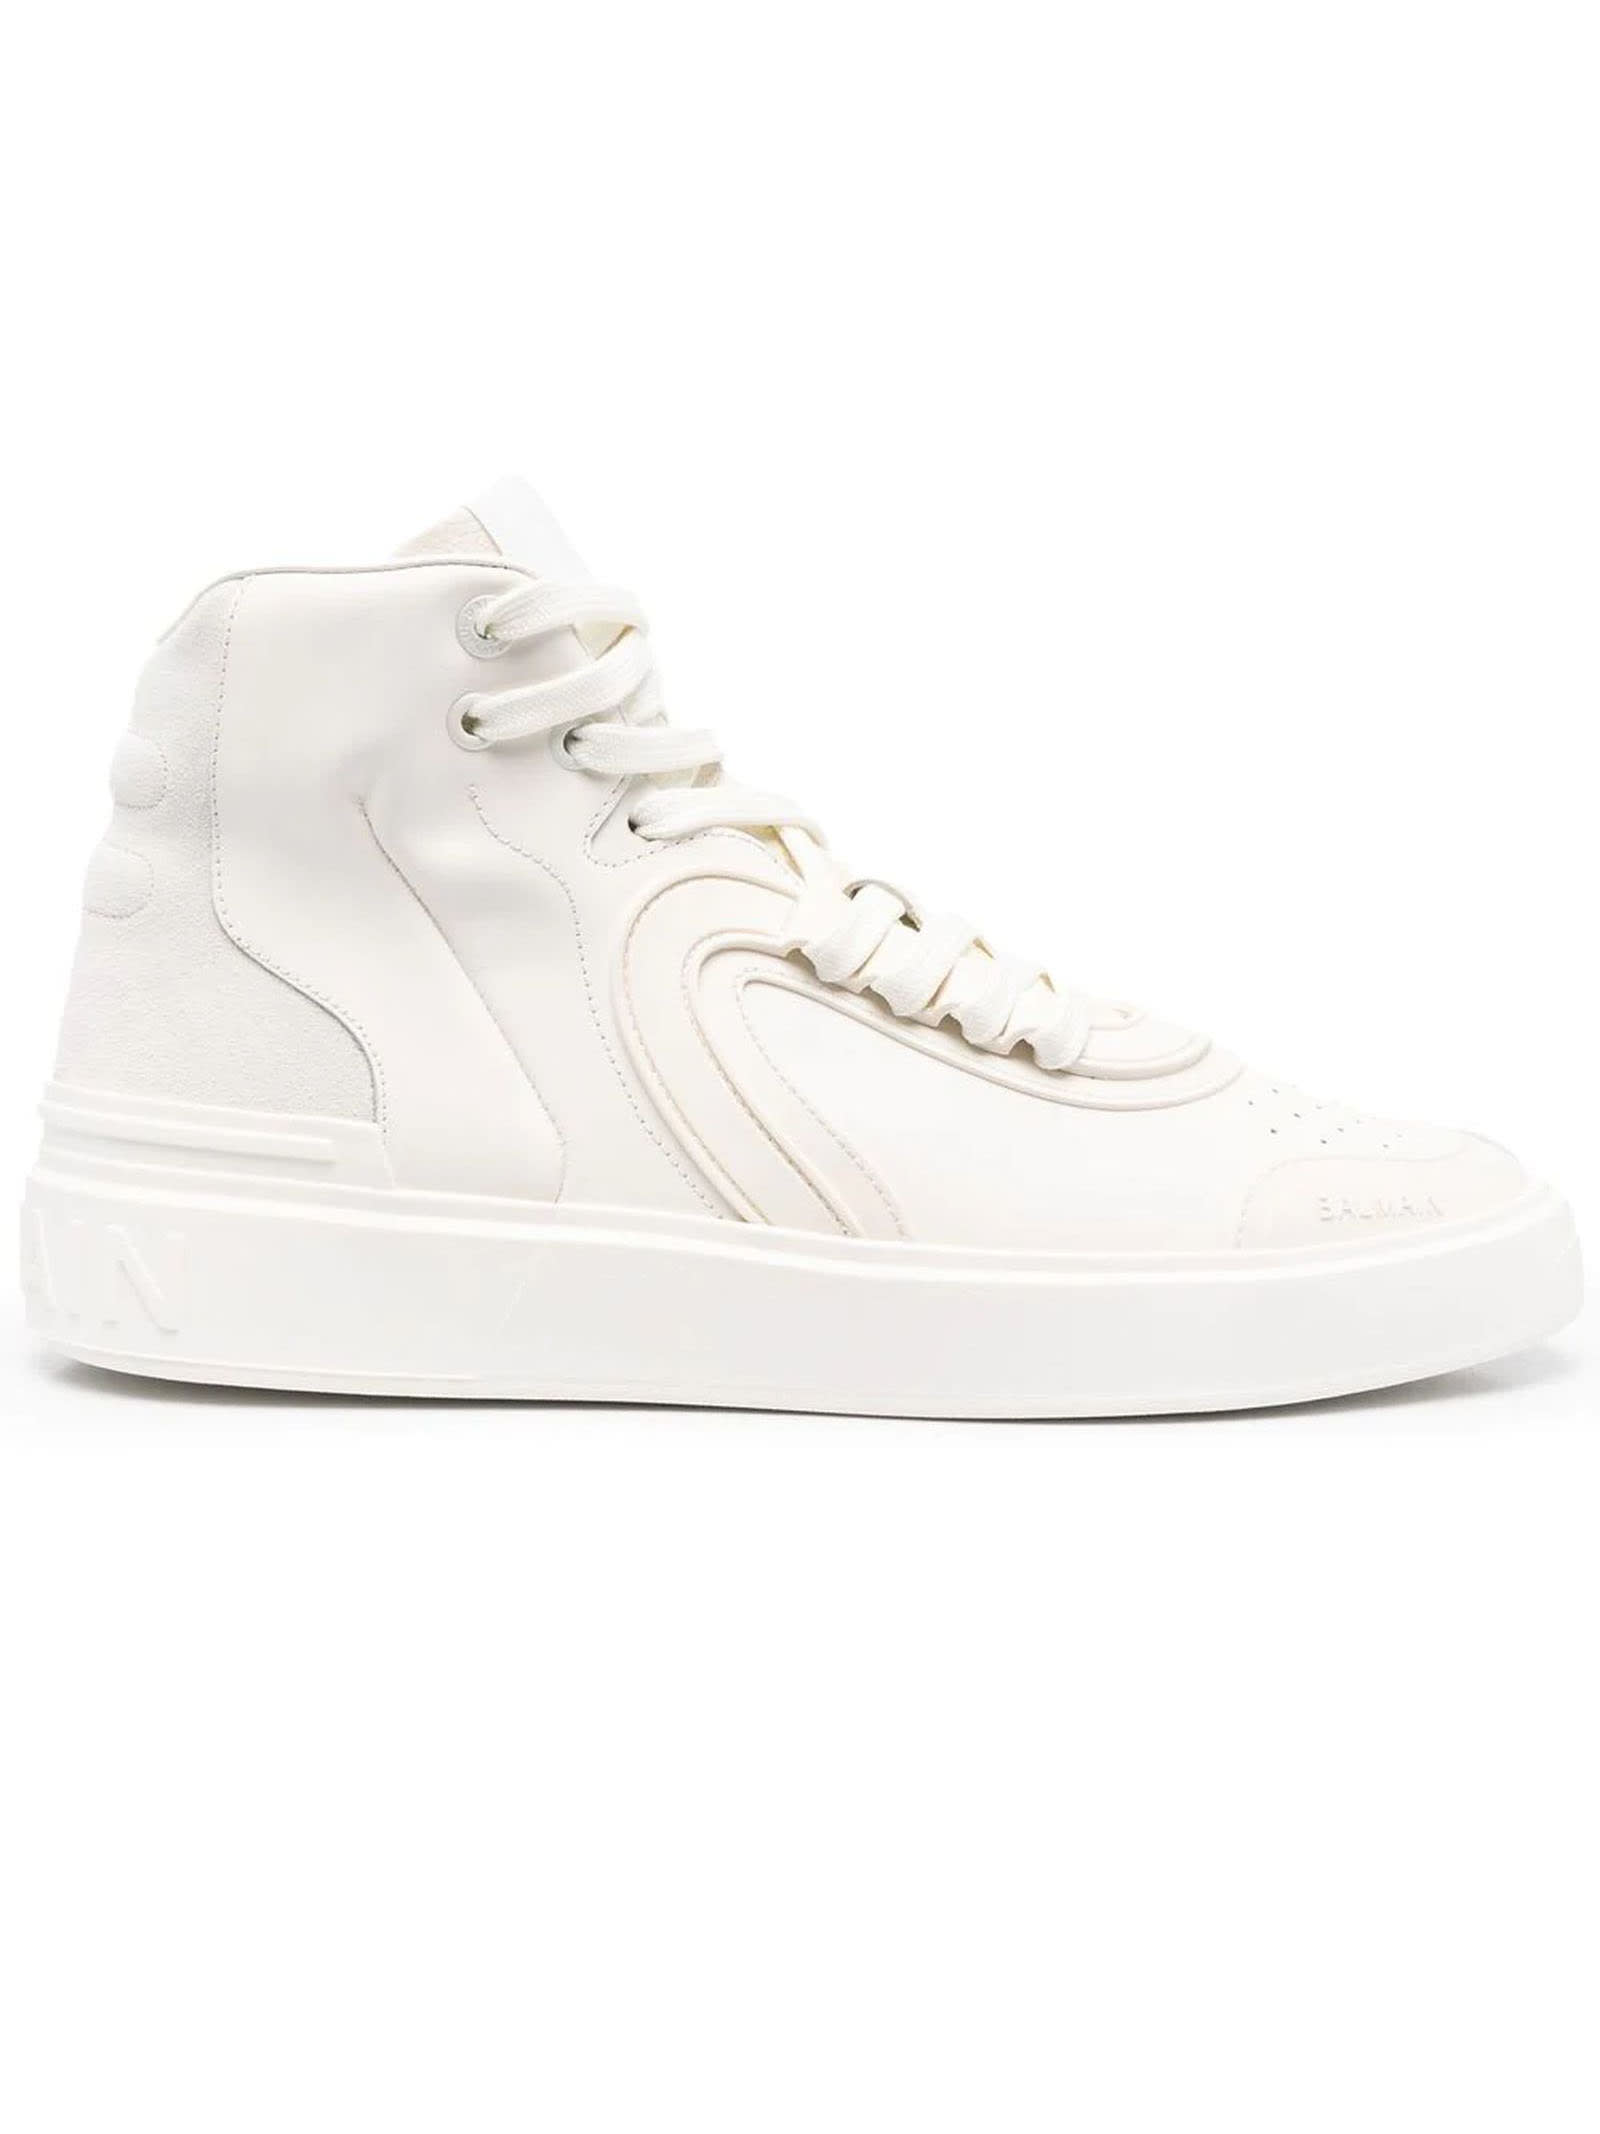 Balmain White Lambskin Hi-top Sneakers